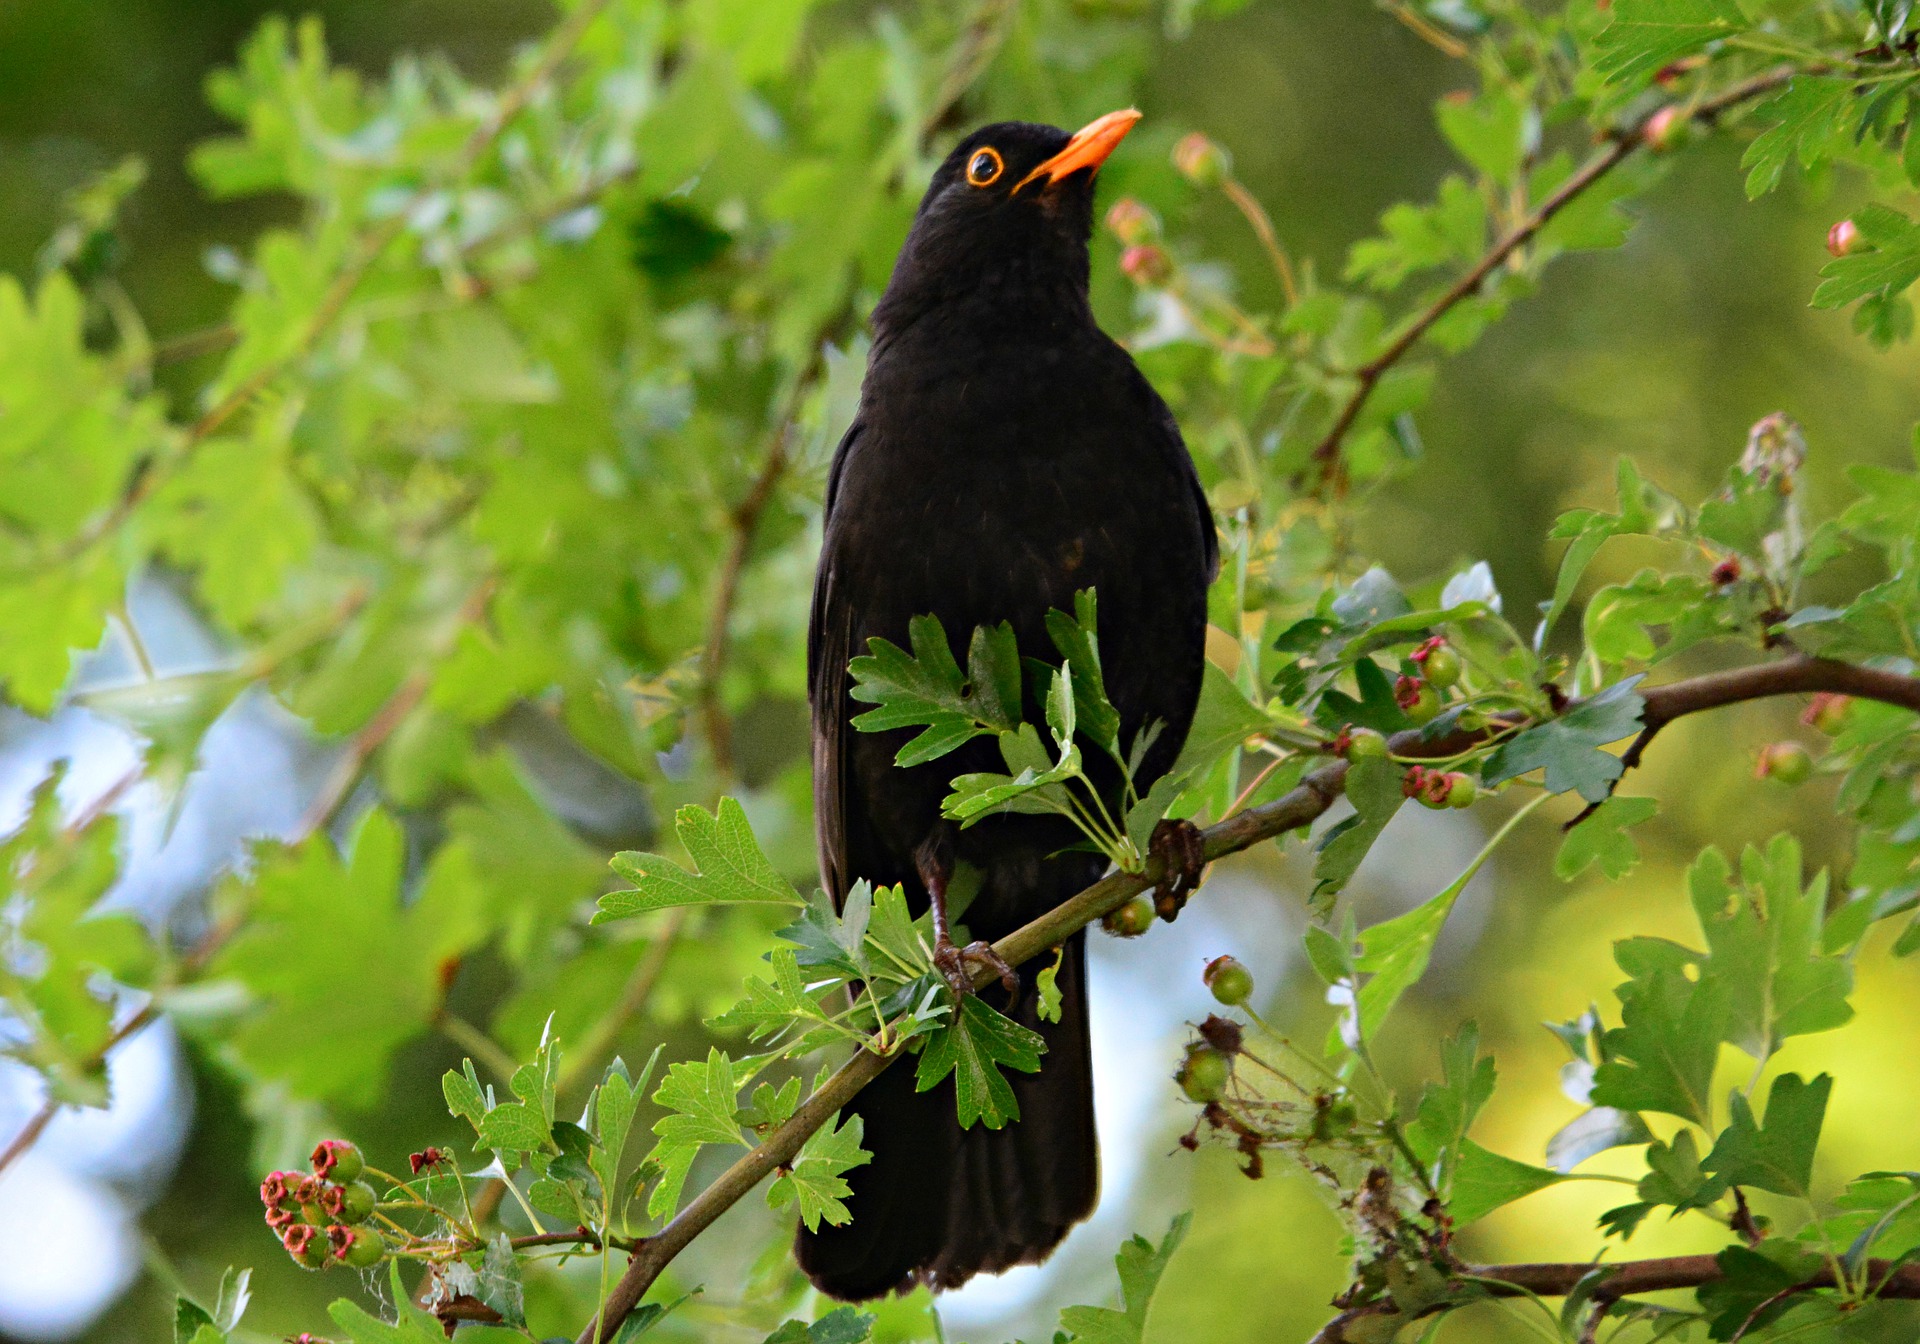 https://pixabay.com/photos/blackbird-songbird-animal-beak-4265545/